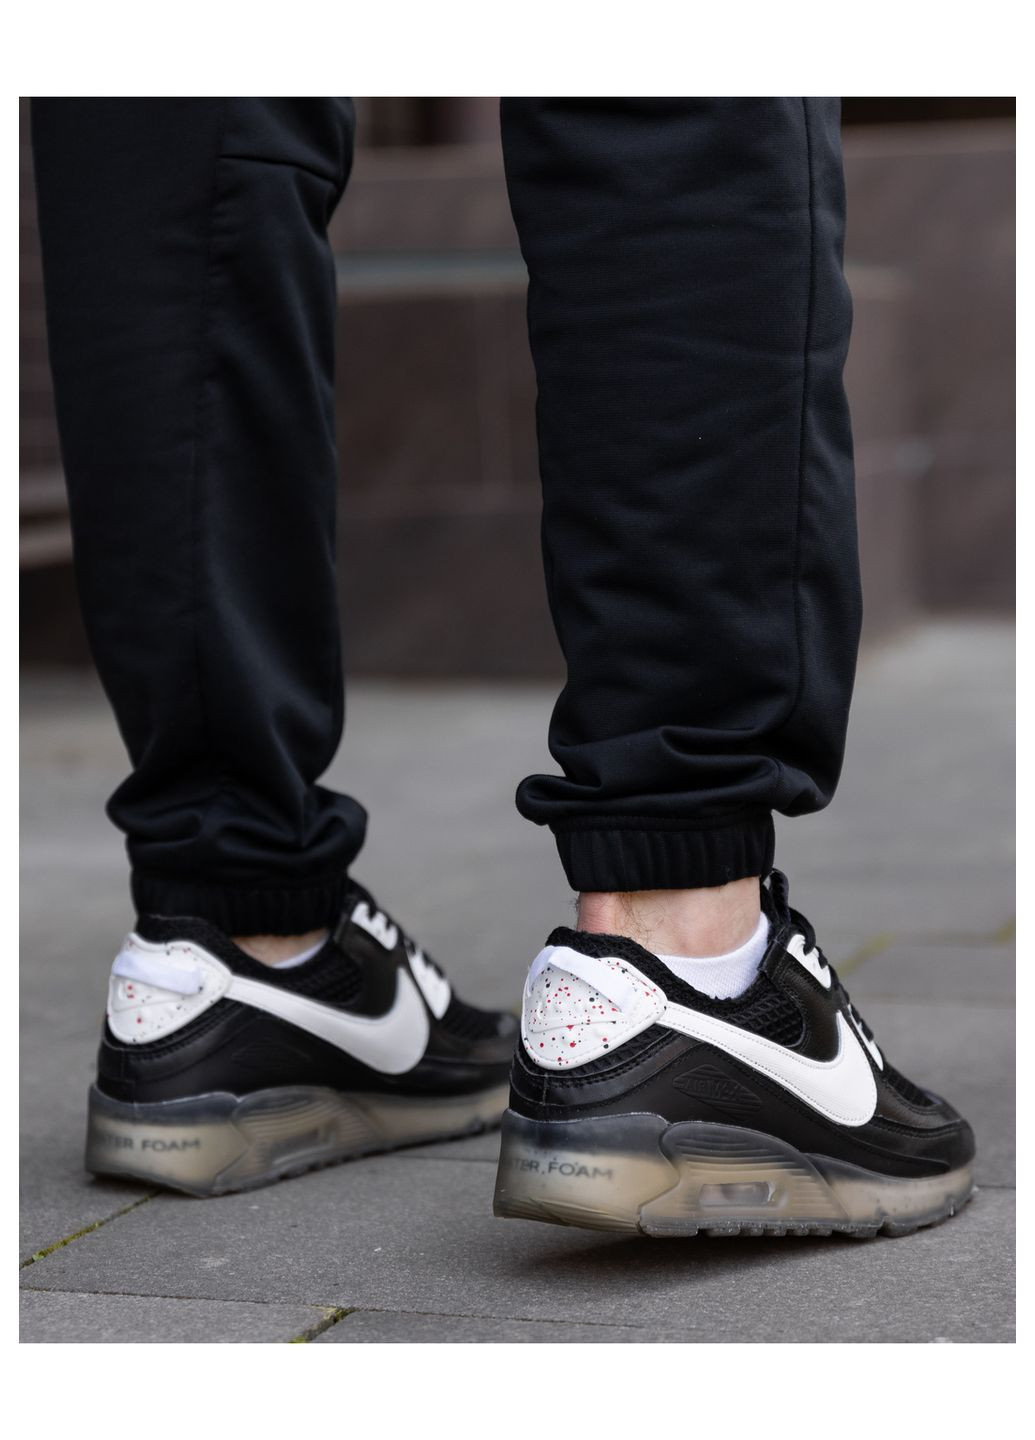 Черные демисезонные кроссовки мужские terrascape black white, вьетнам Nike Air Max 90